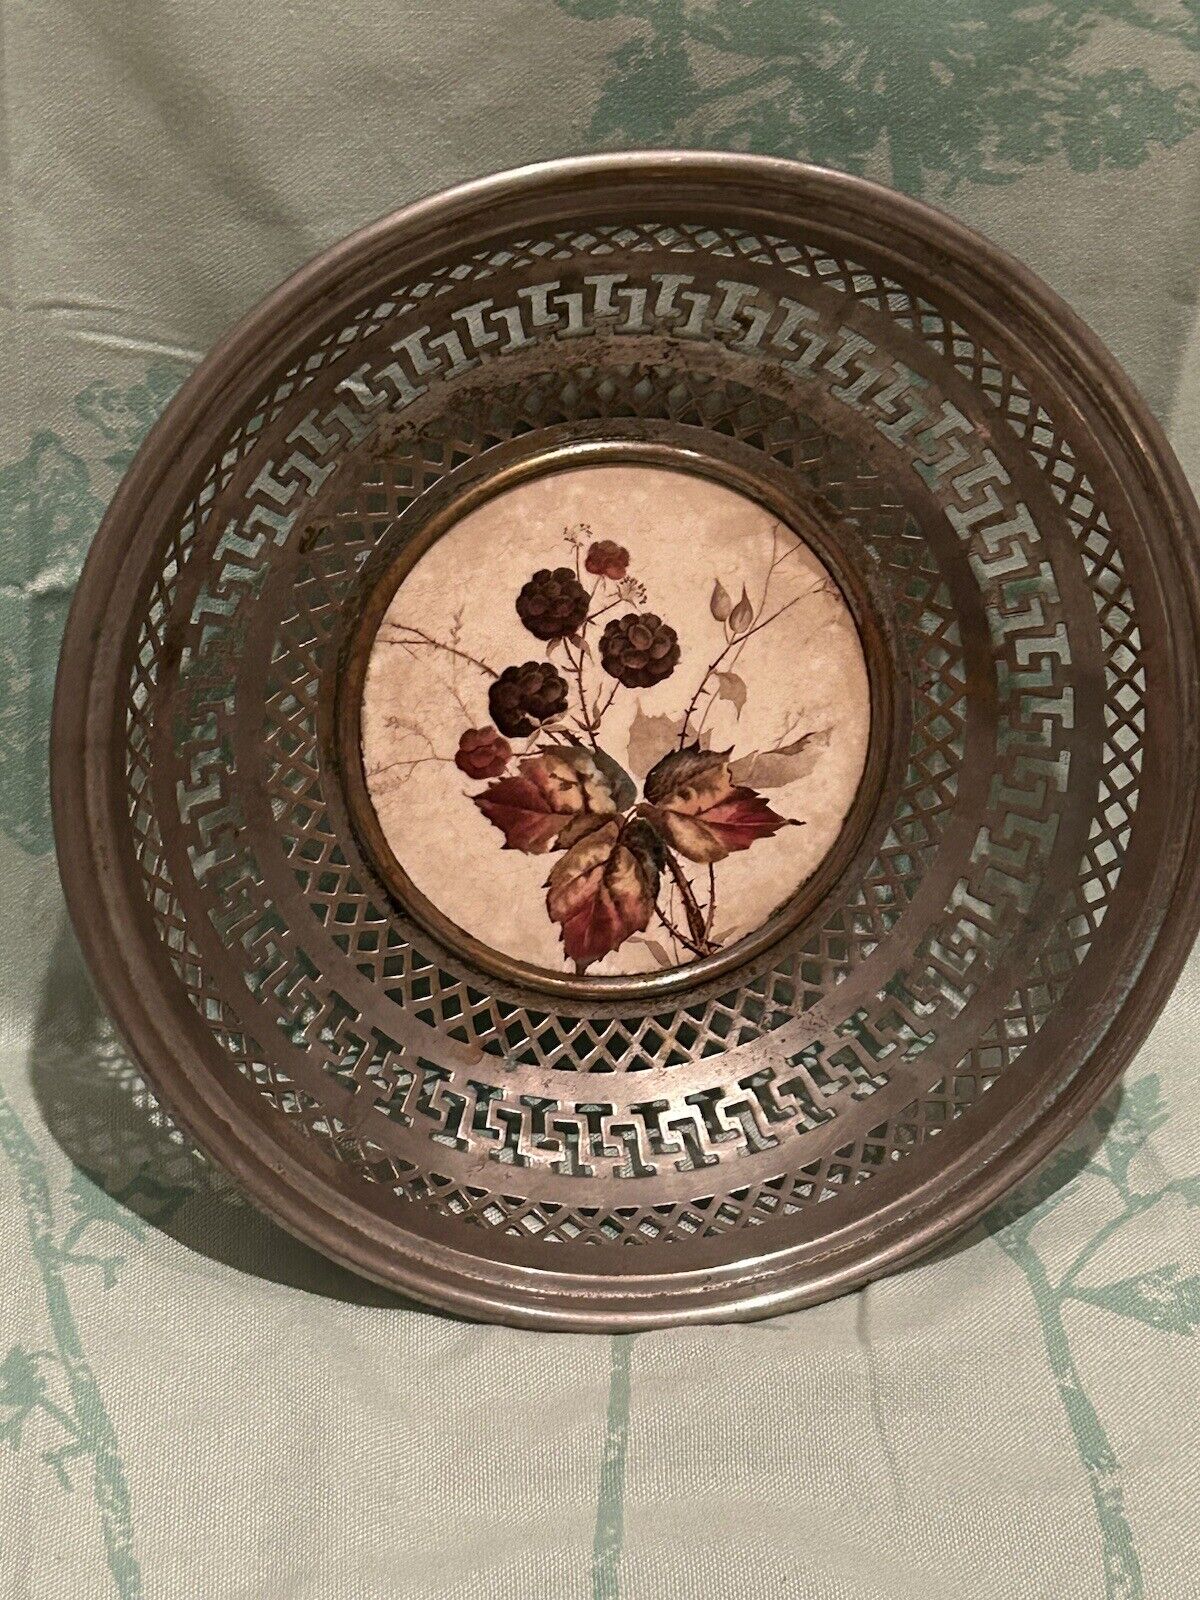 Lovely Vintage Plate/Bowl